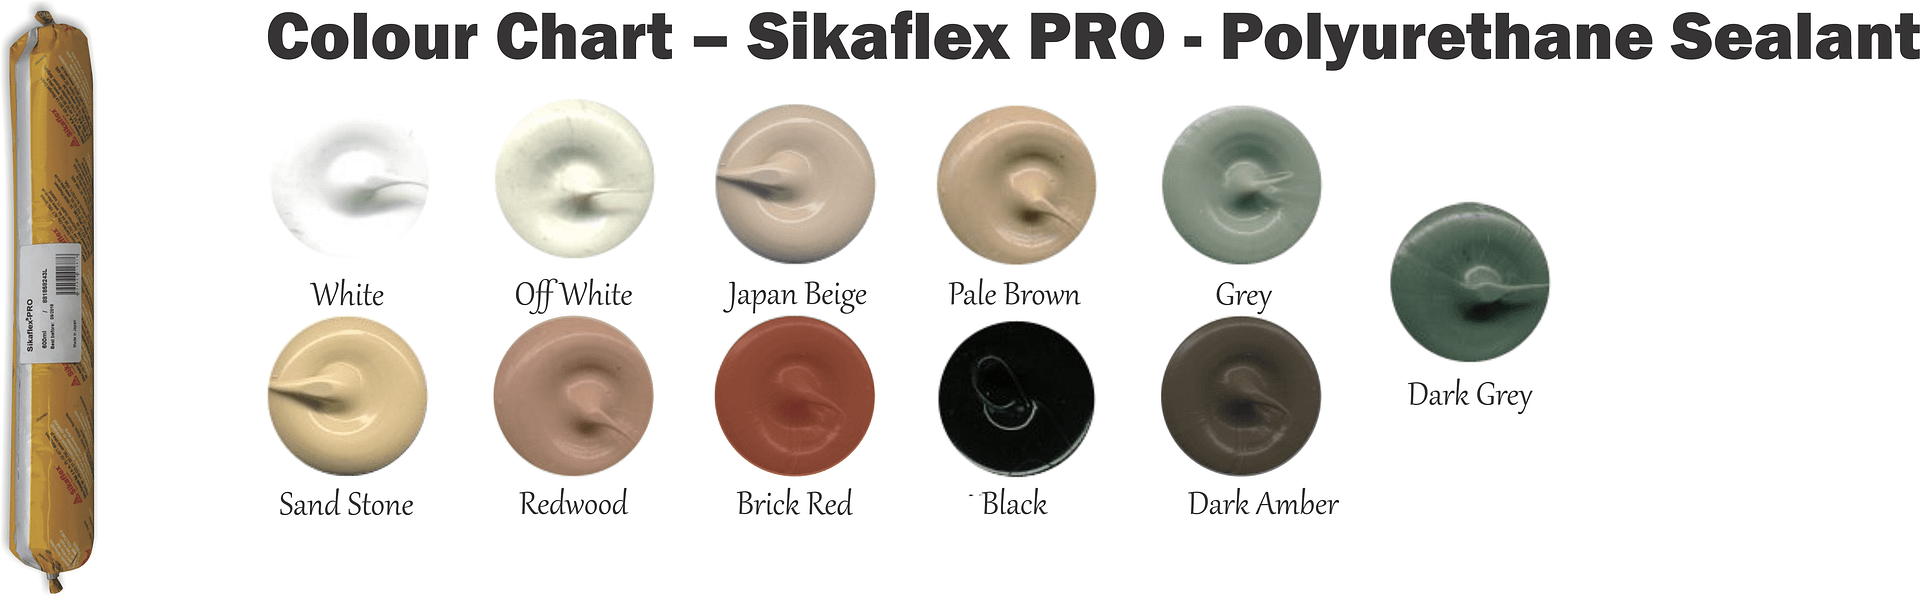 Colour Chart – Sikaflex PRO – Polyurethane Sealant 